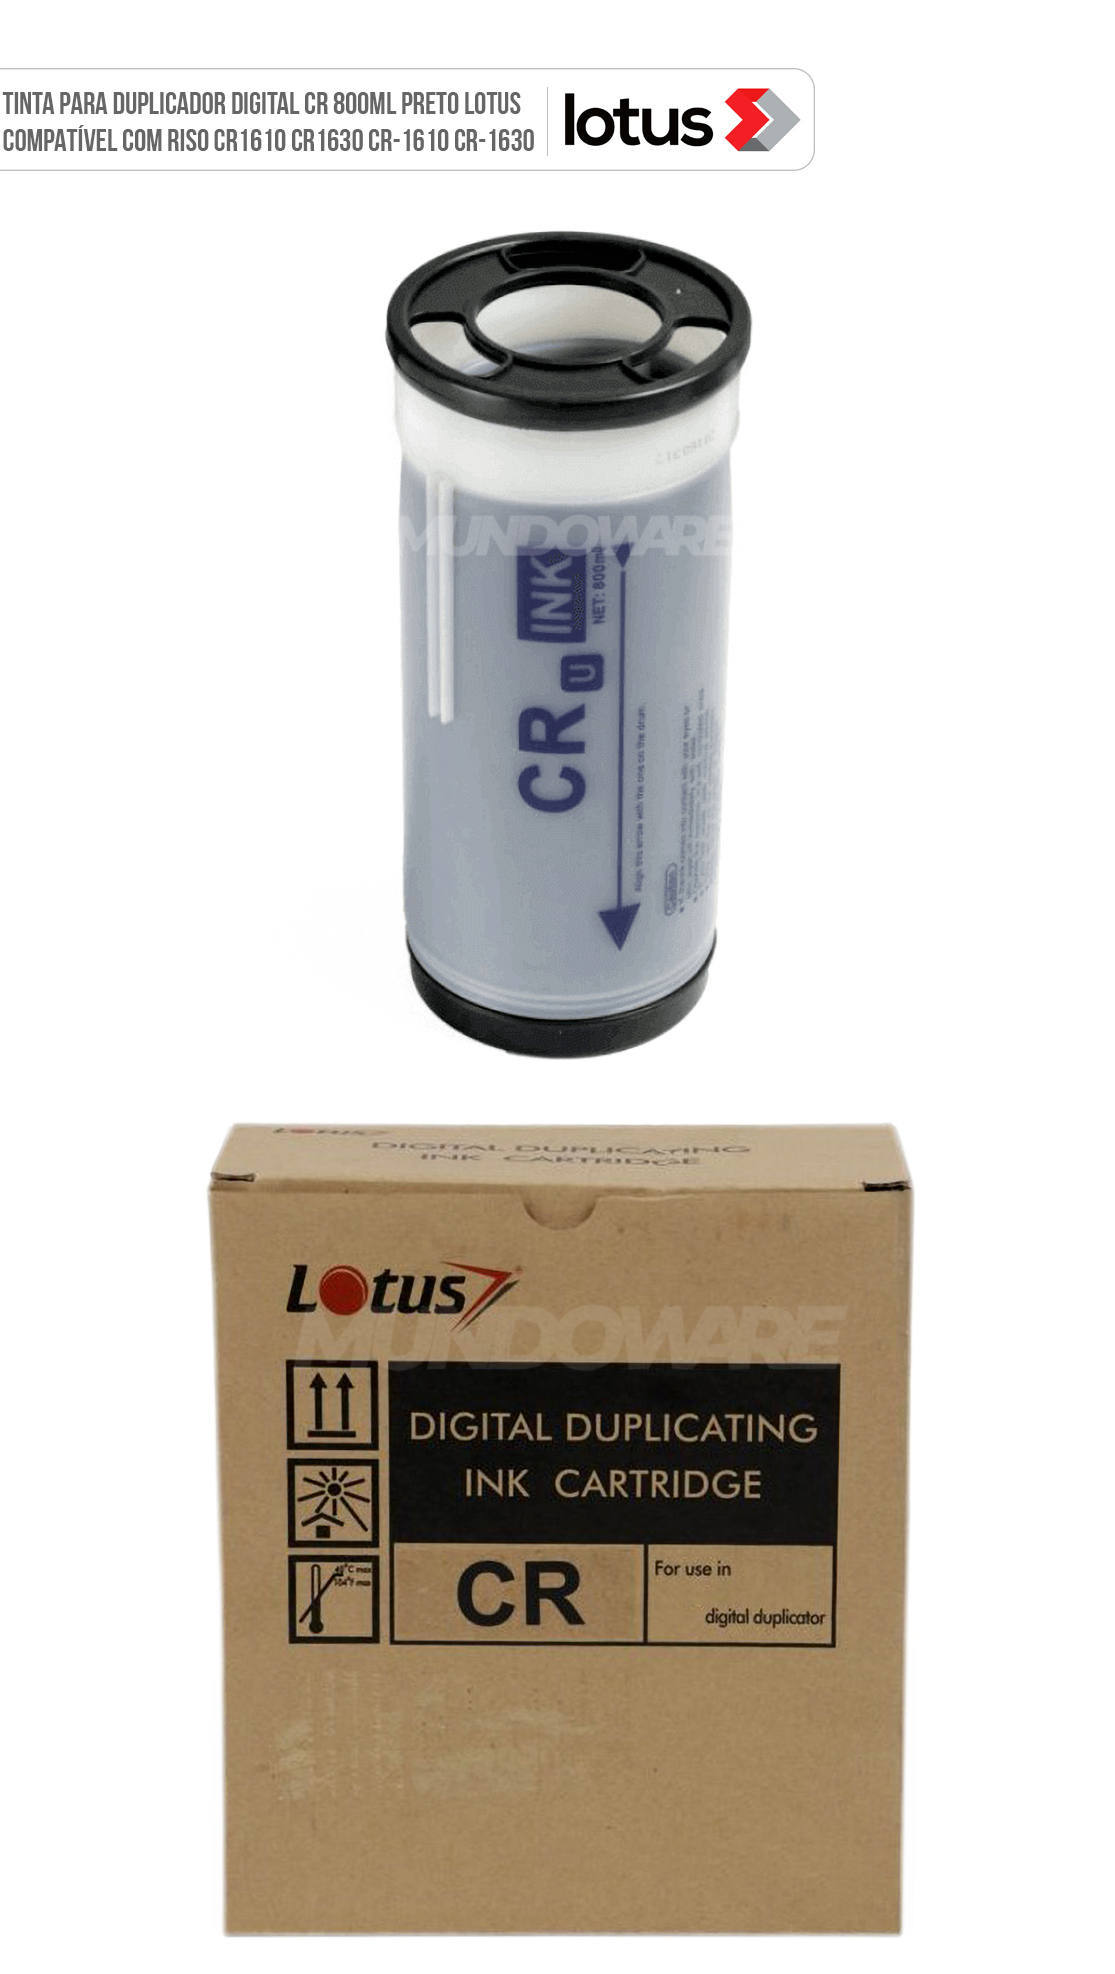 Tinta para Duplicador Digital CR 800ml Preto Lotus Compatível para Riso CR1610 CR1630 CR-1610 CR-1630